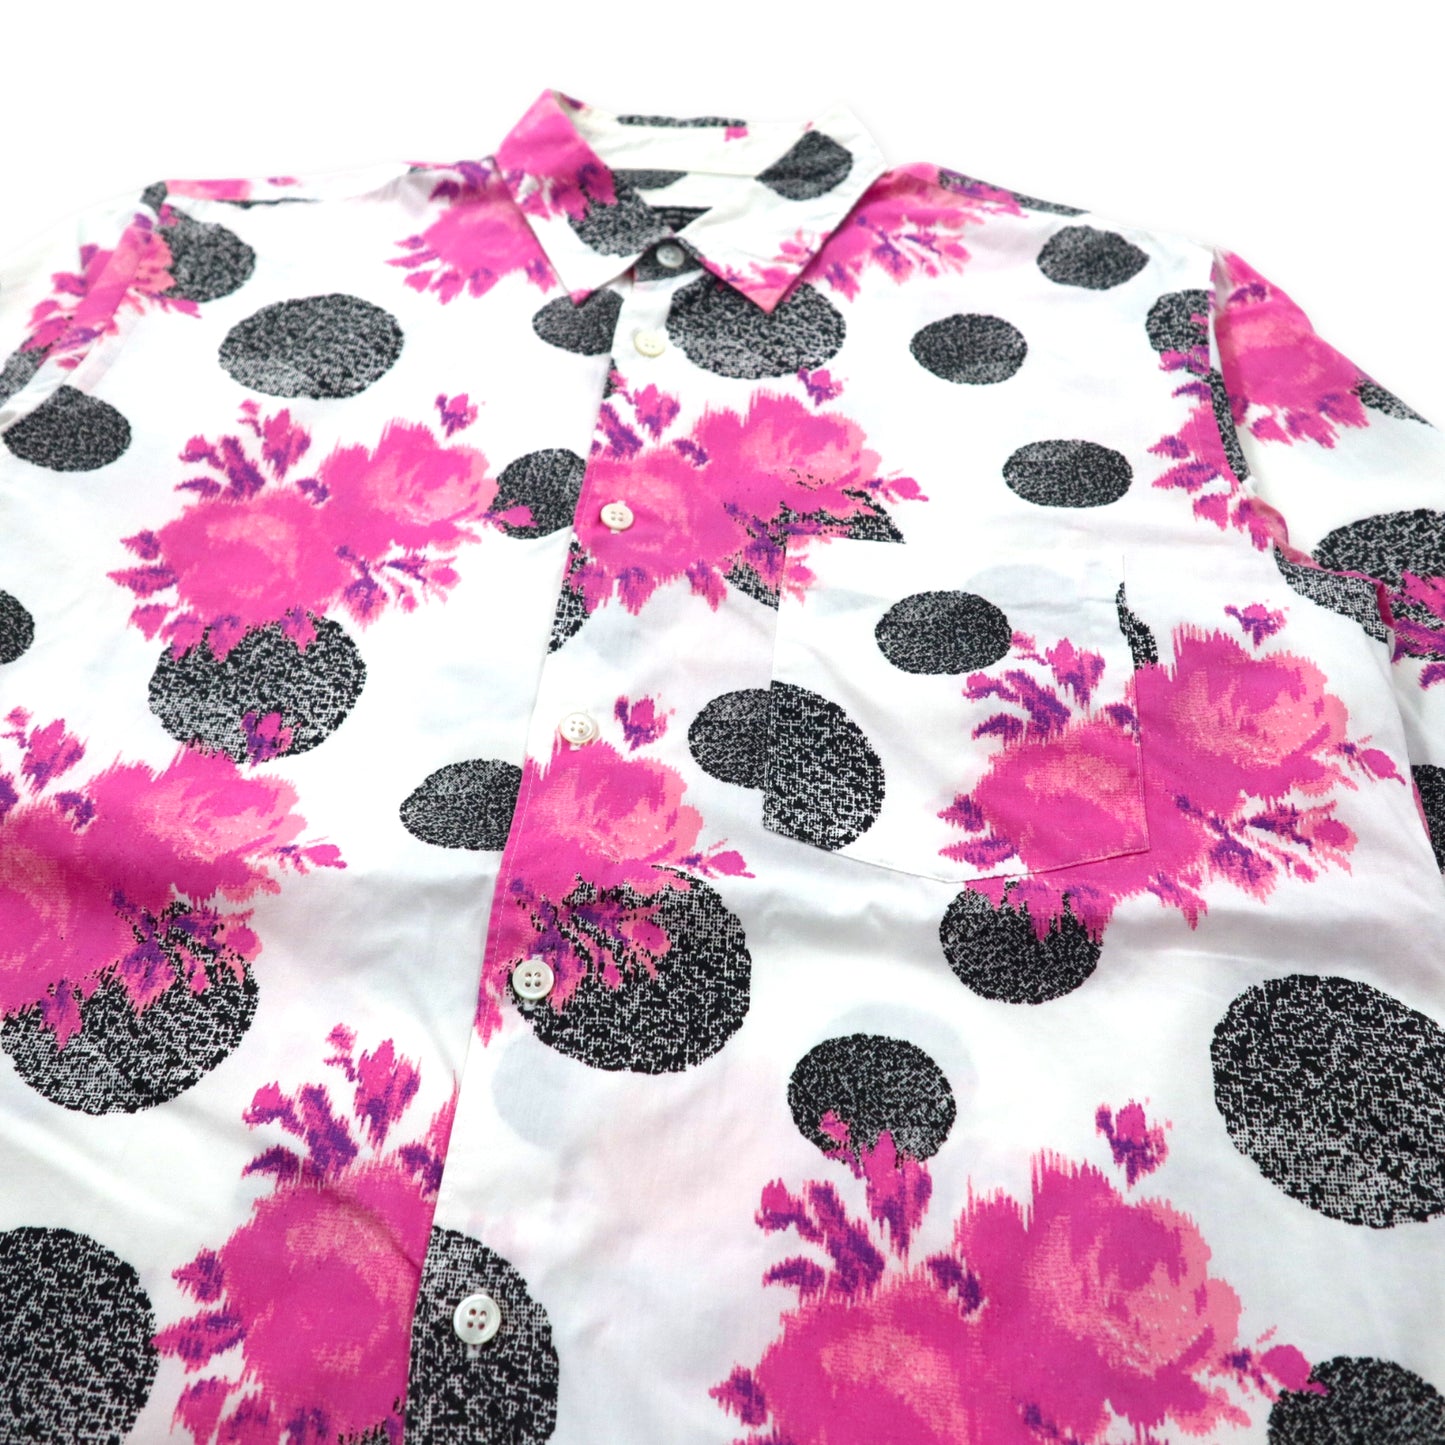 COMME des GARCONS HOMME PATTERNED Dress Shirt S White Cotton PJ-B053 Japan  MADE